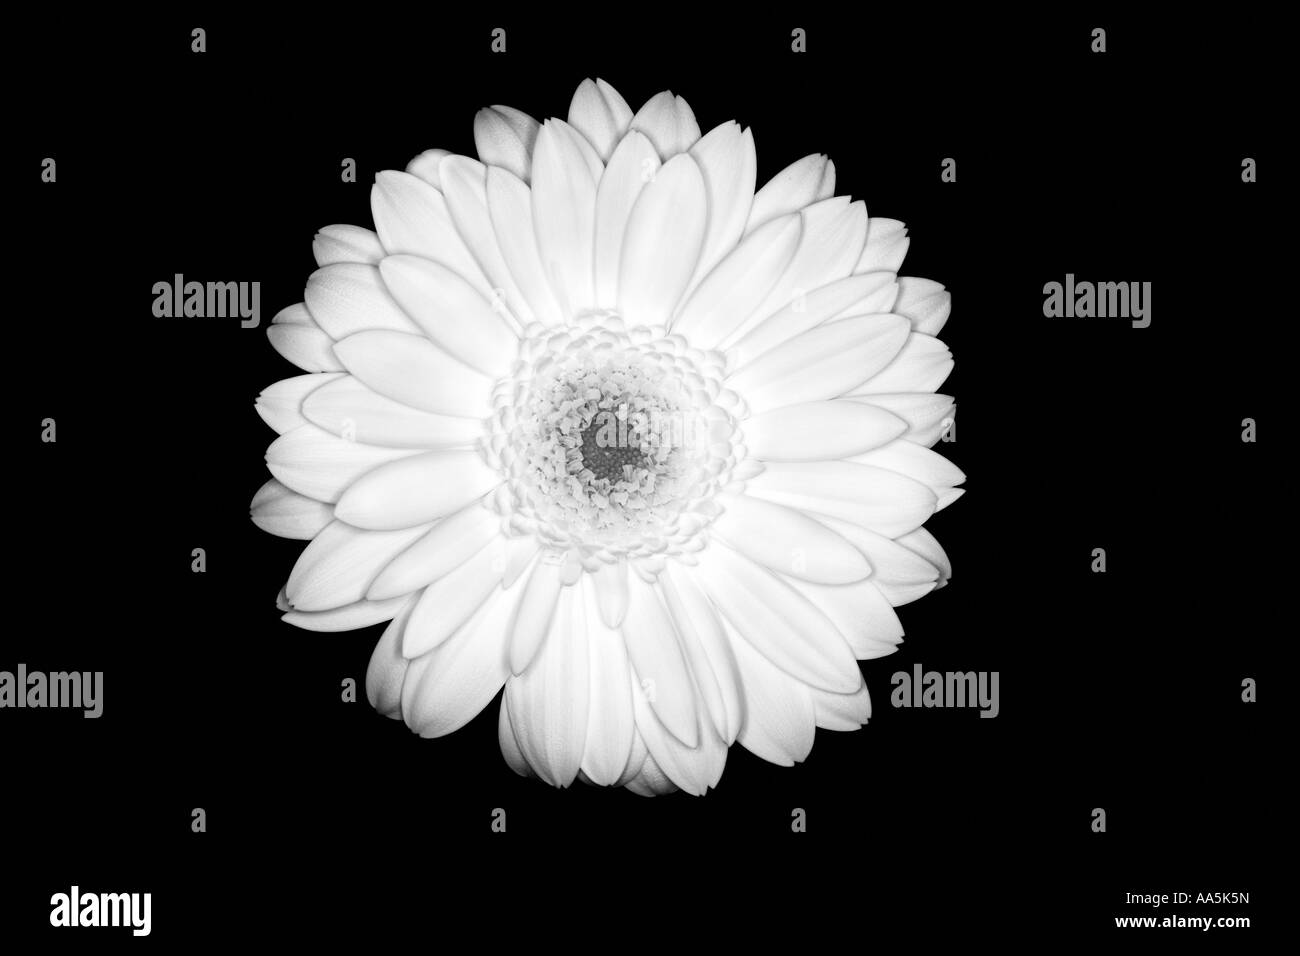 Black and white flower Black background Gerbera Stock Photo